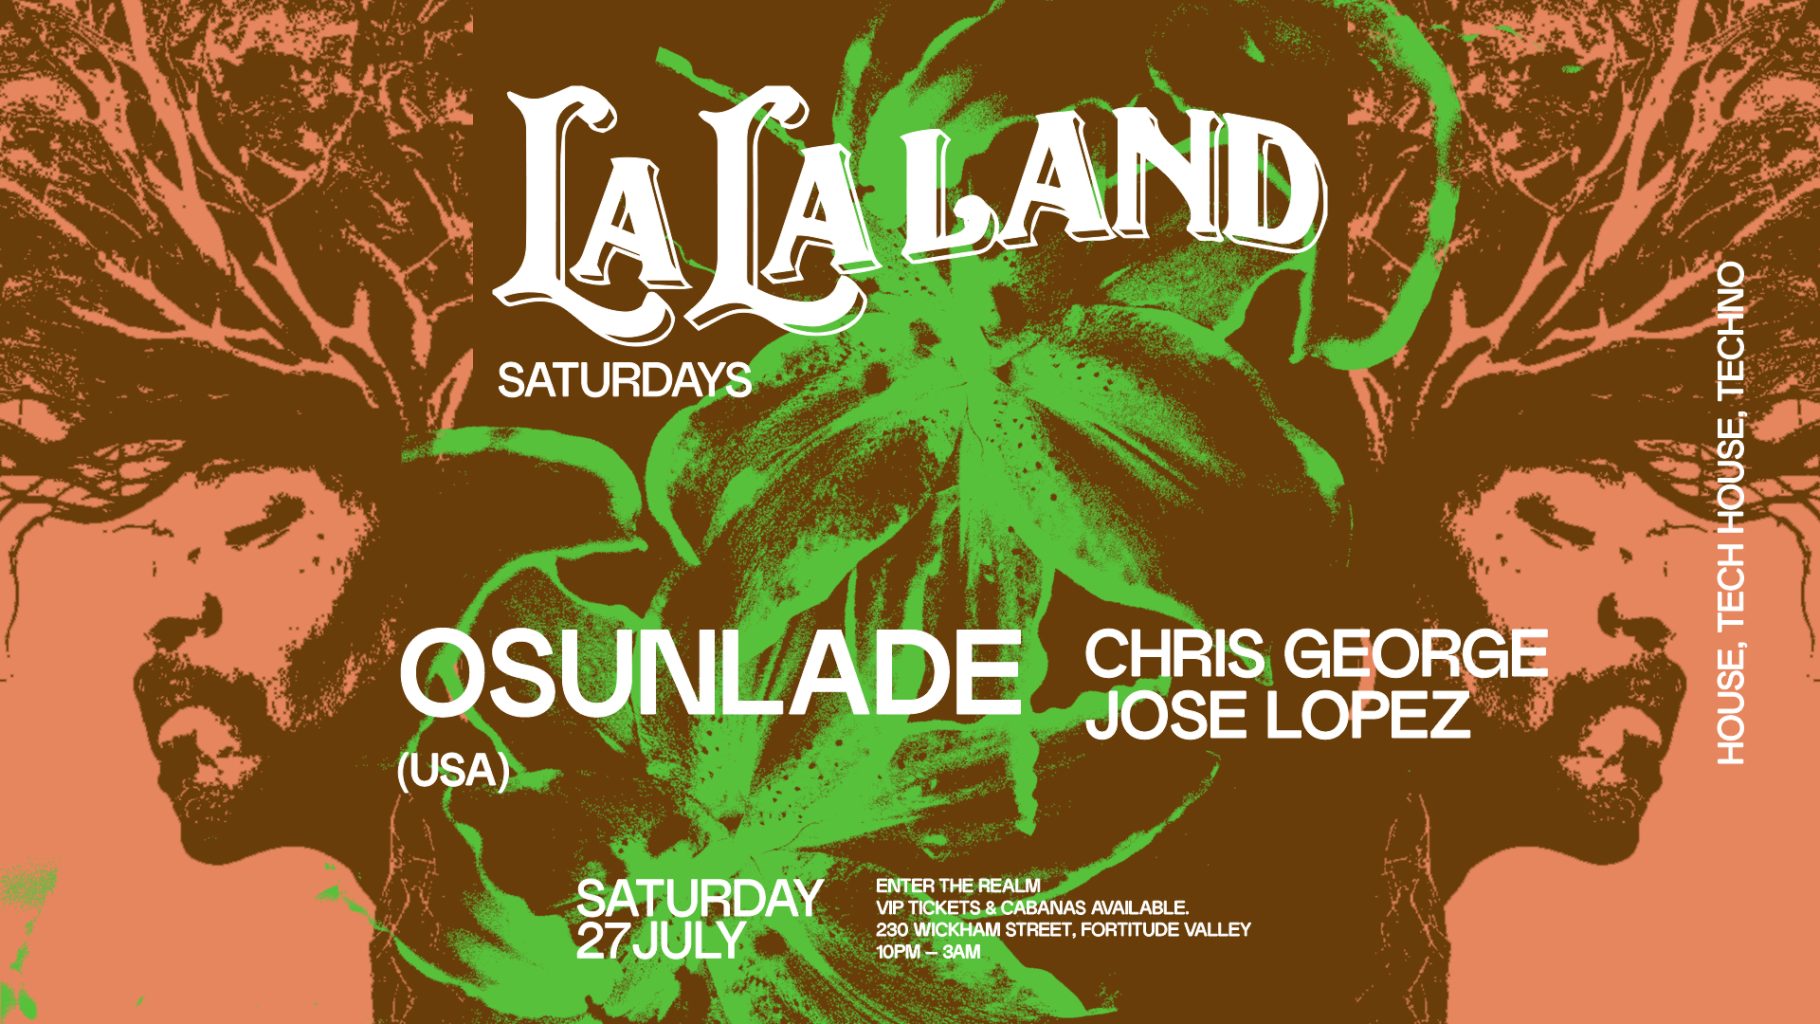 La La Land Saturdays ft. Osunlade (USA) | Events at The Prince Consort